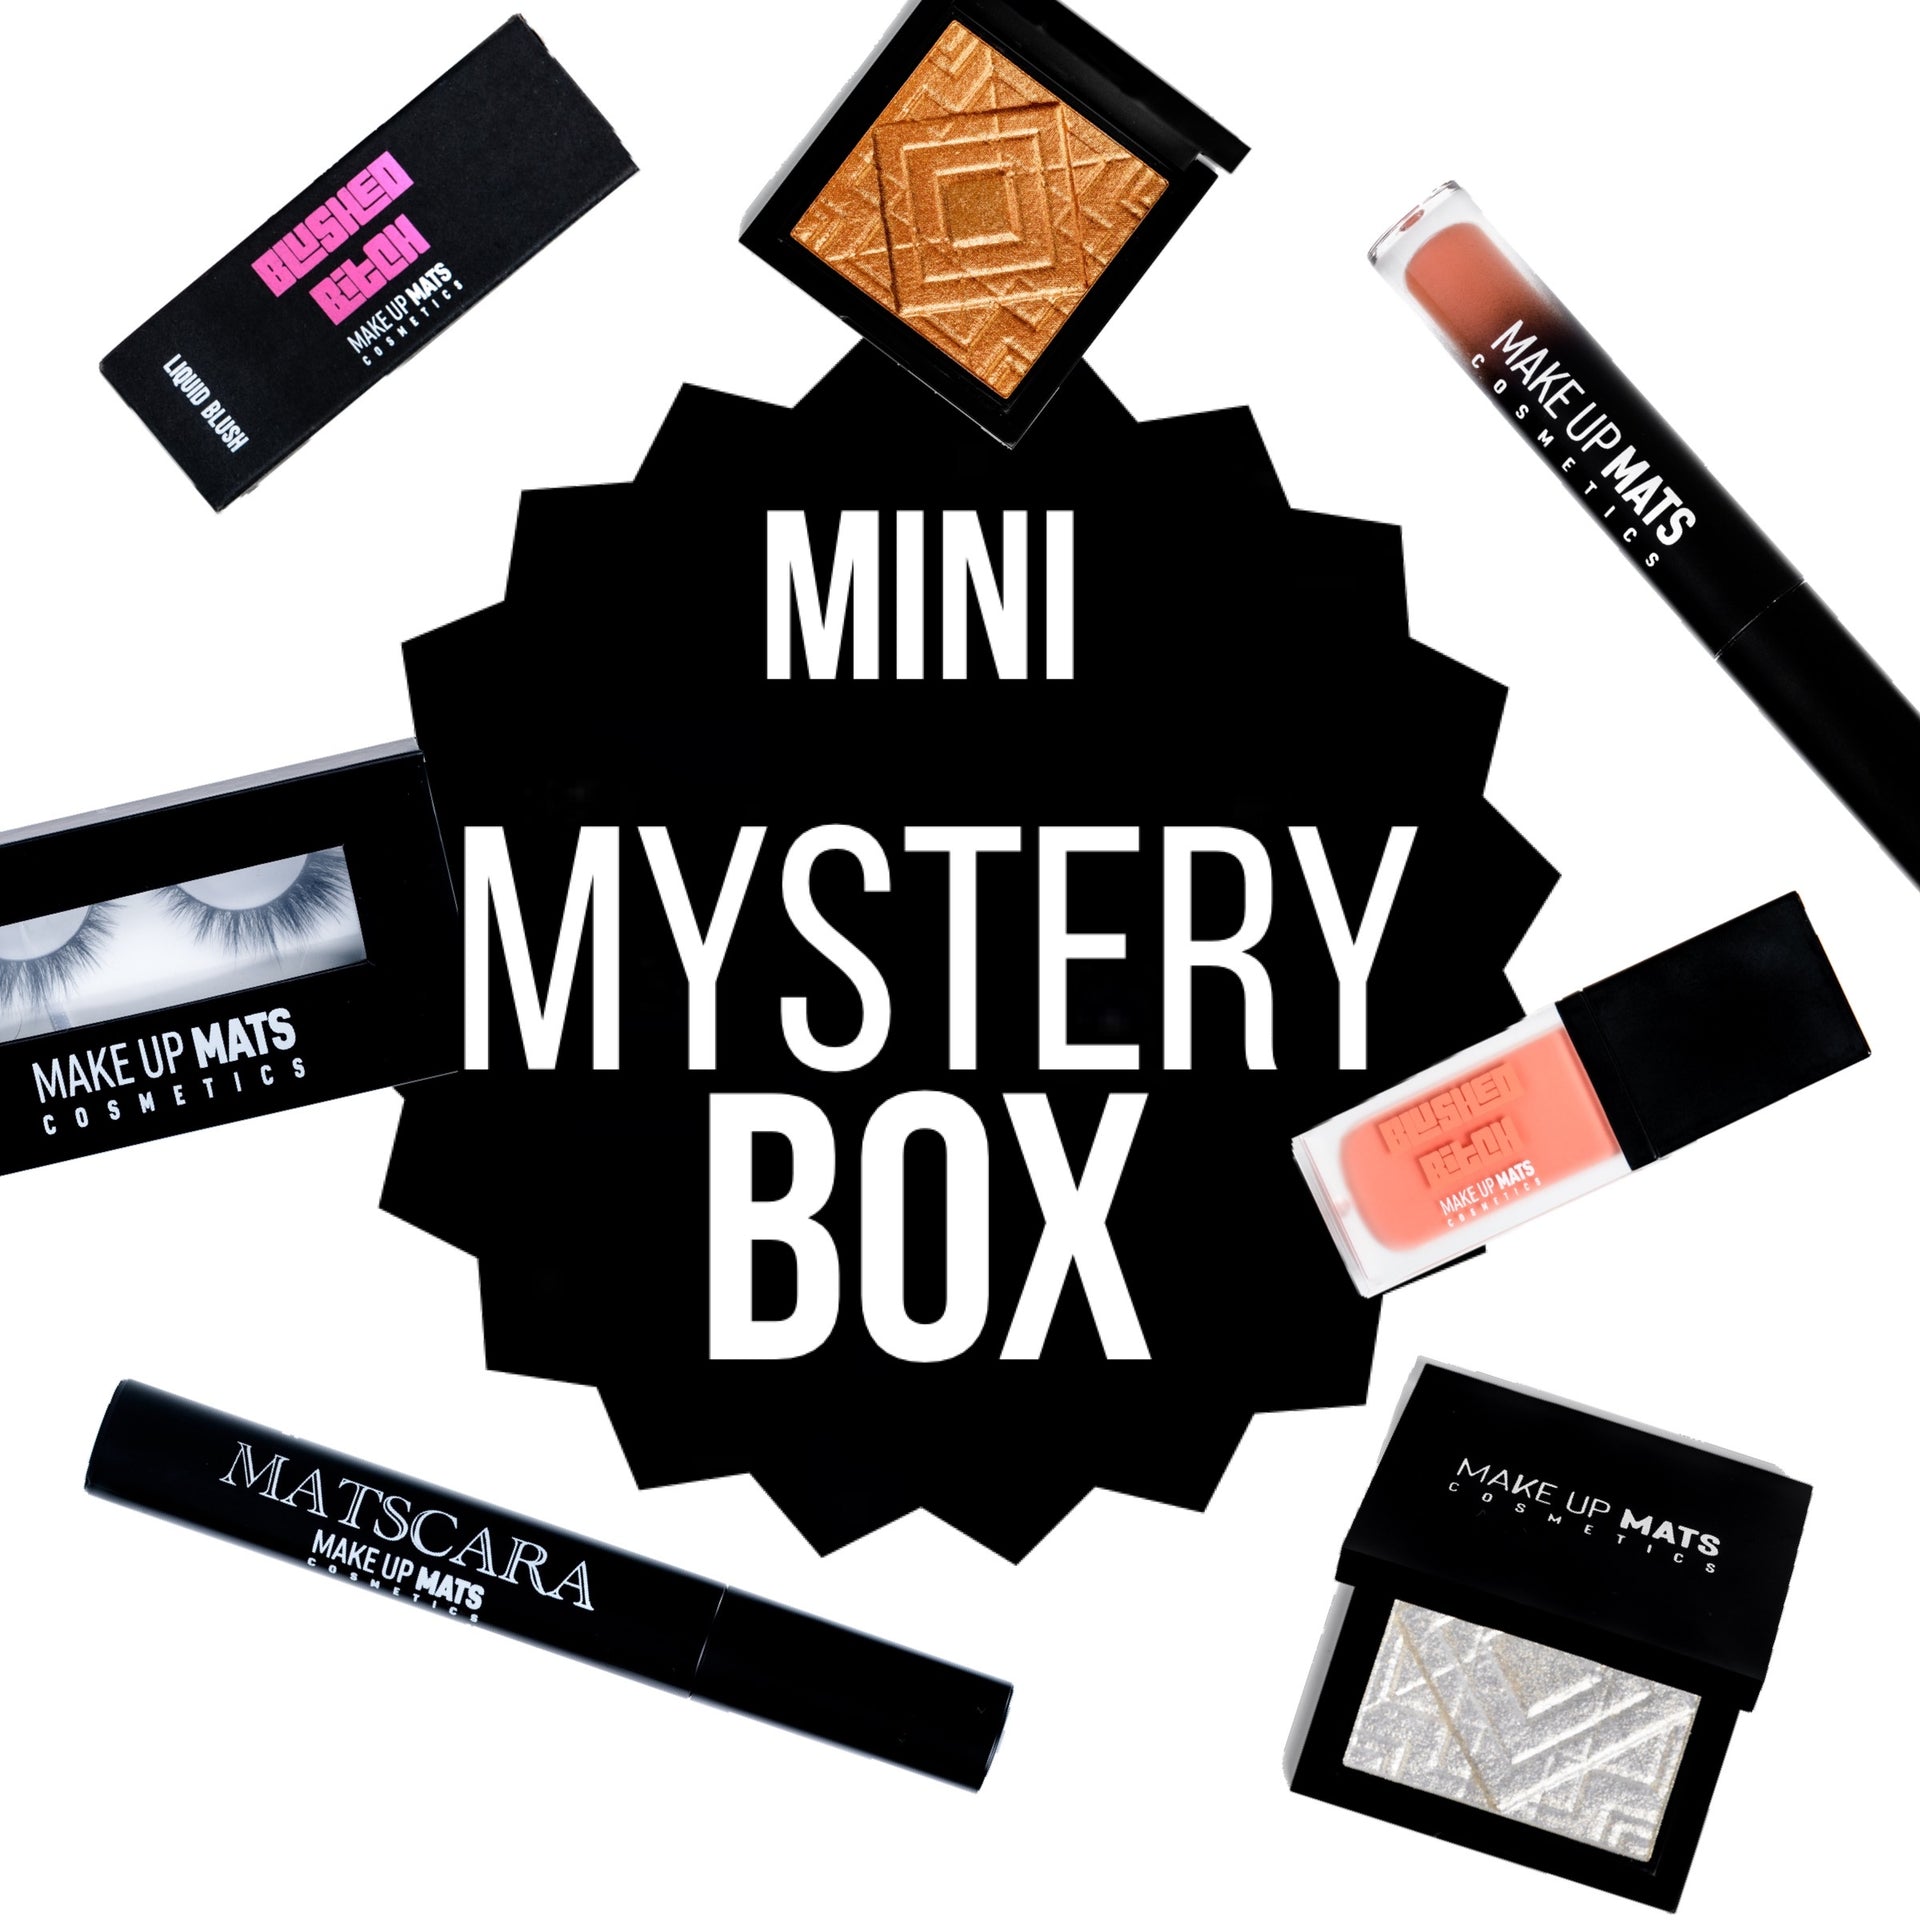 Mini Mystery Box – MakeUpMats Cosmetics